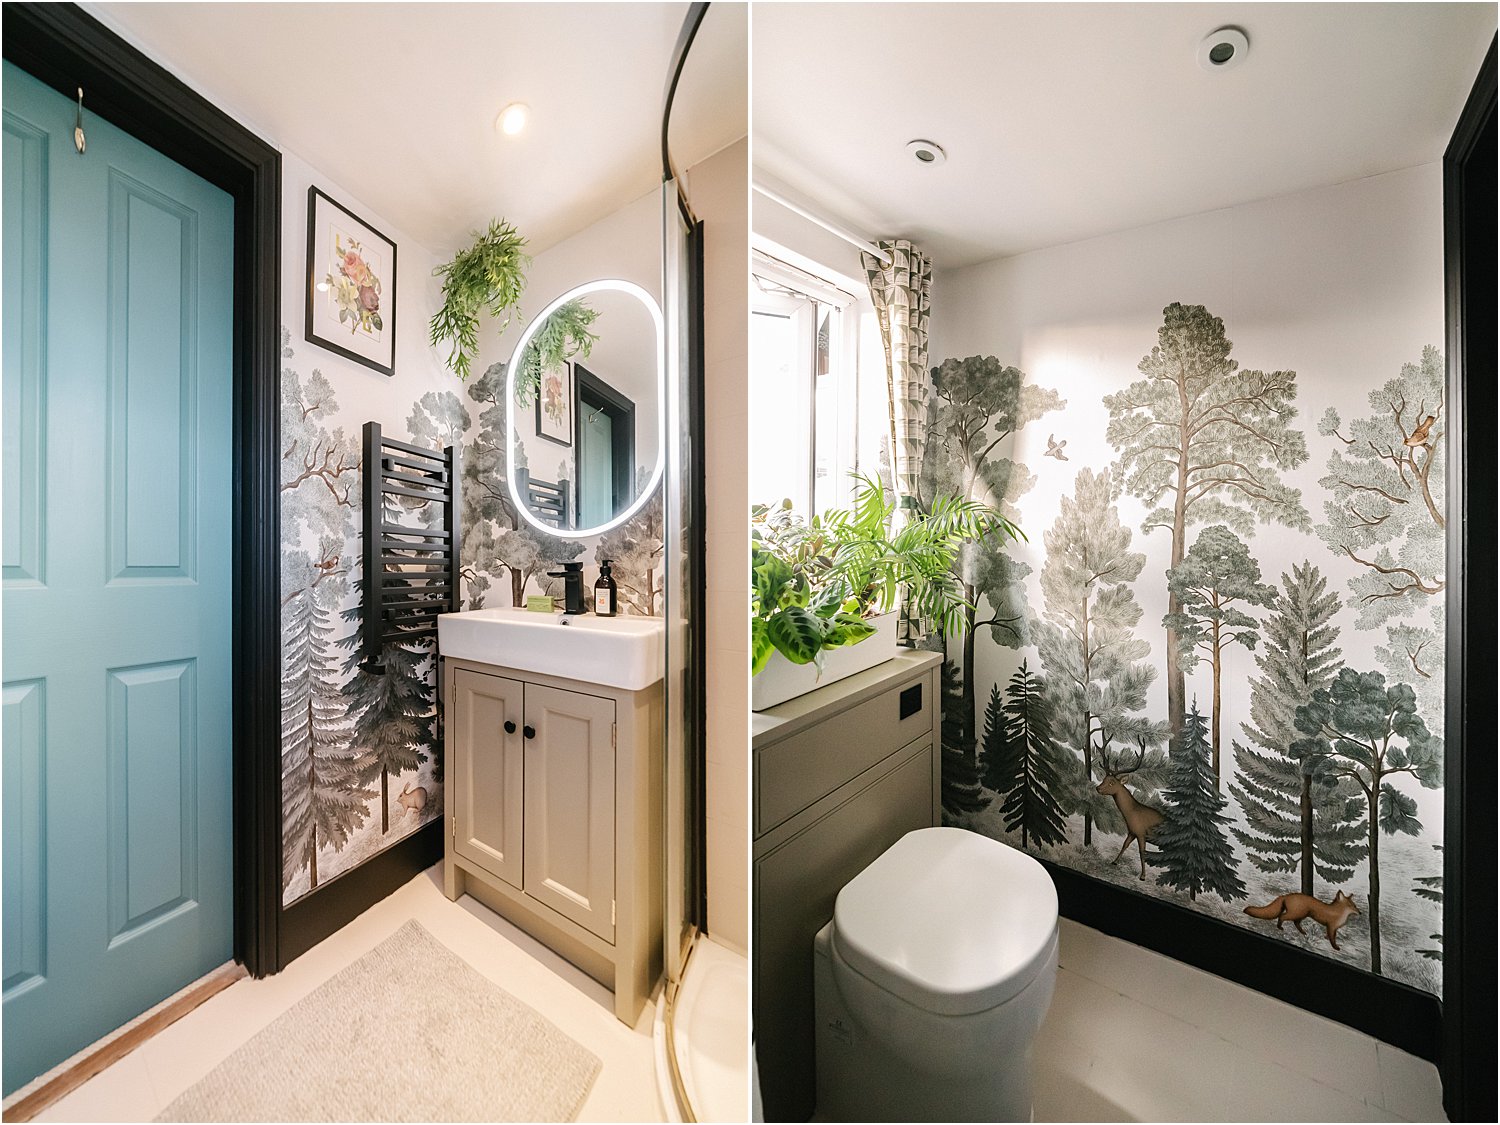 3-steps-to-a-dreamy-scandi-bathroom-roper-rhodes-lily-sawyer-photo-layered-home